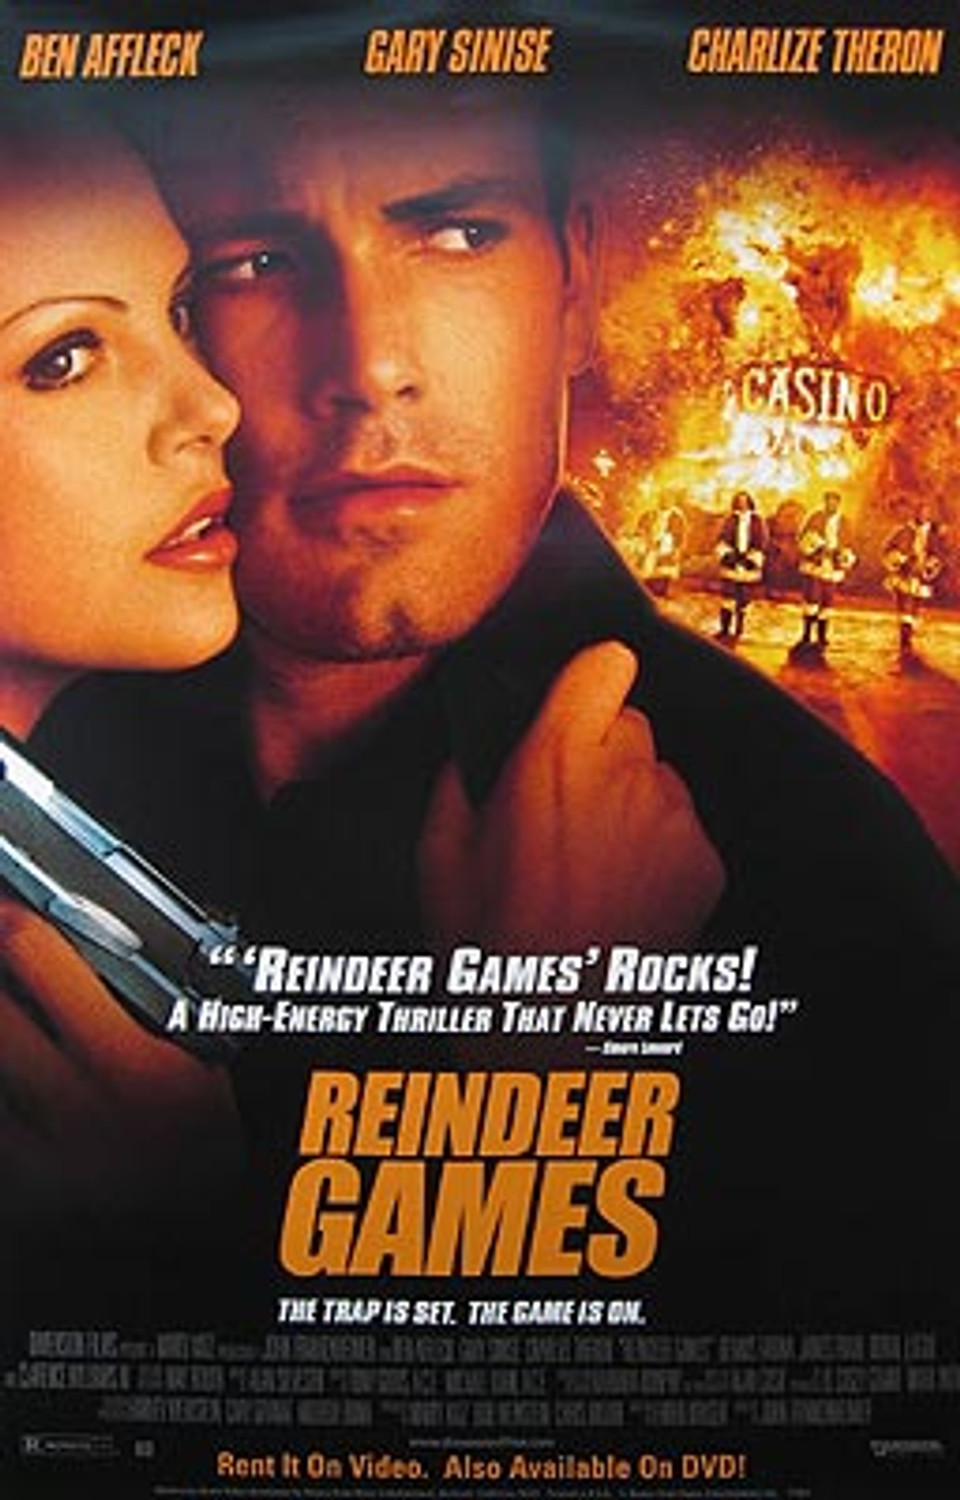 REINDEER GAMES (Video) POSTER Starstills.com at (SSB2134-503086) movie buy posters